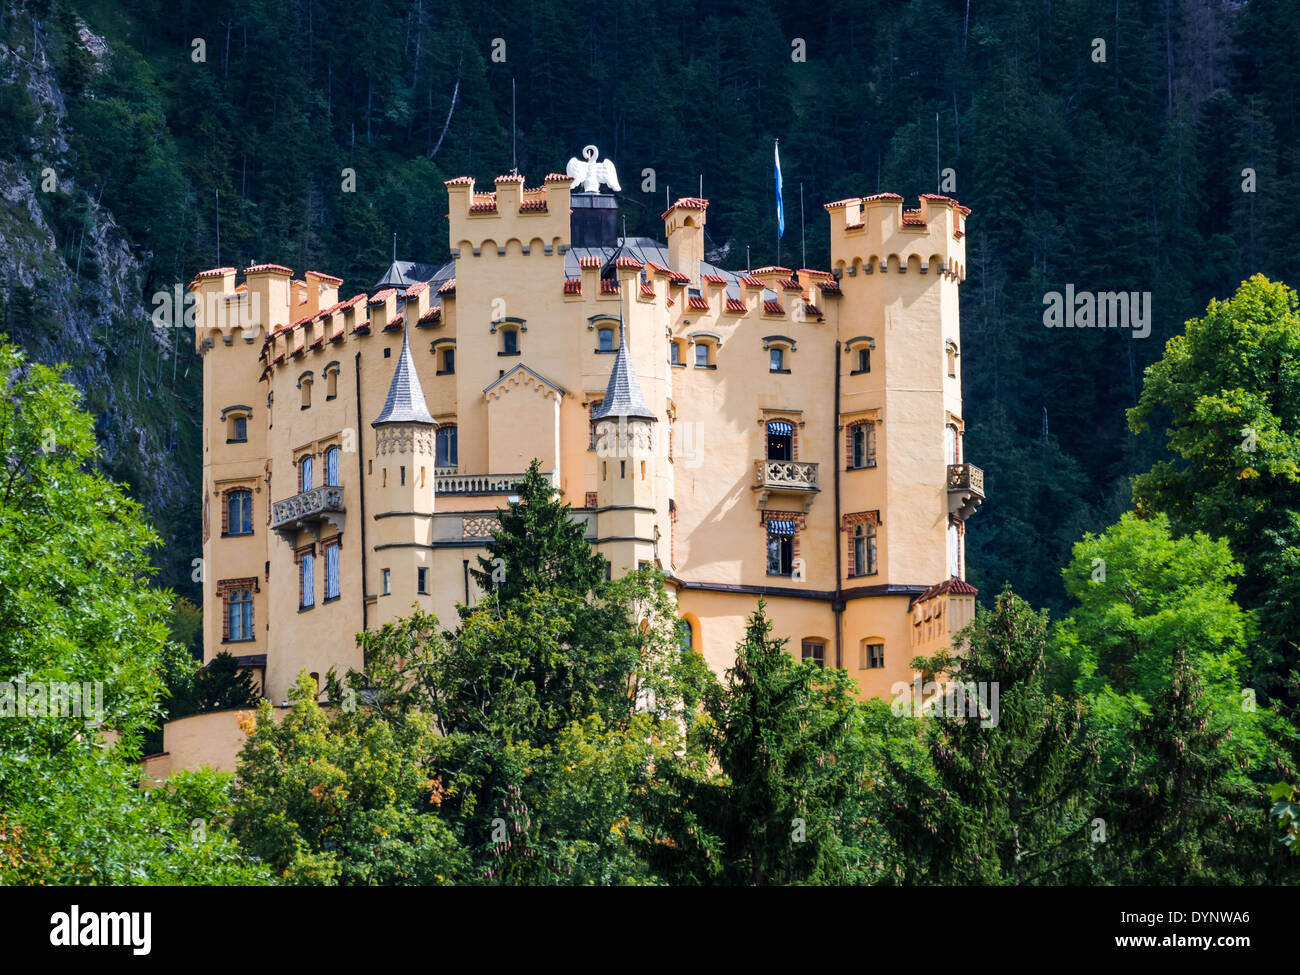 La Baviera, Germania. Schloss Hohenschwangau Castello, palazzo del XIX secolo in Germania meridionale. Foto Stock